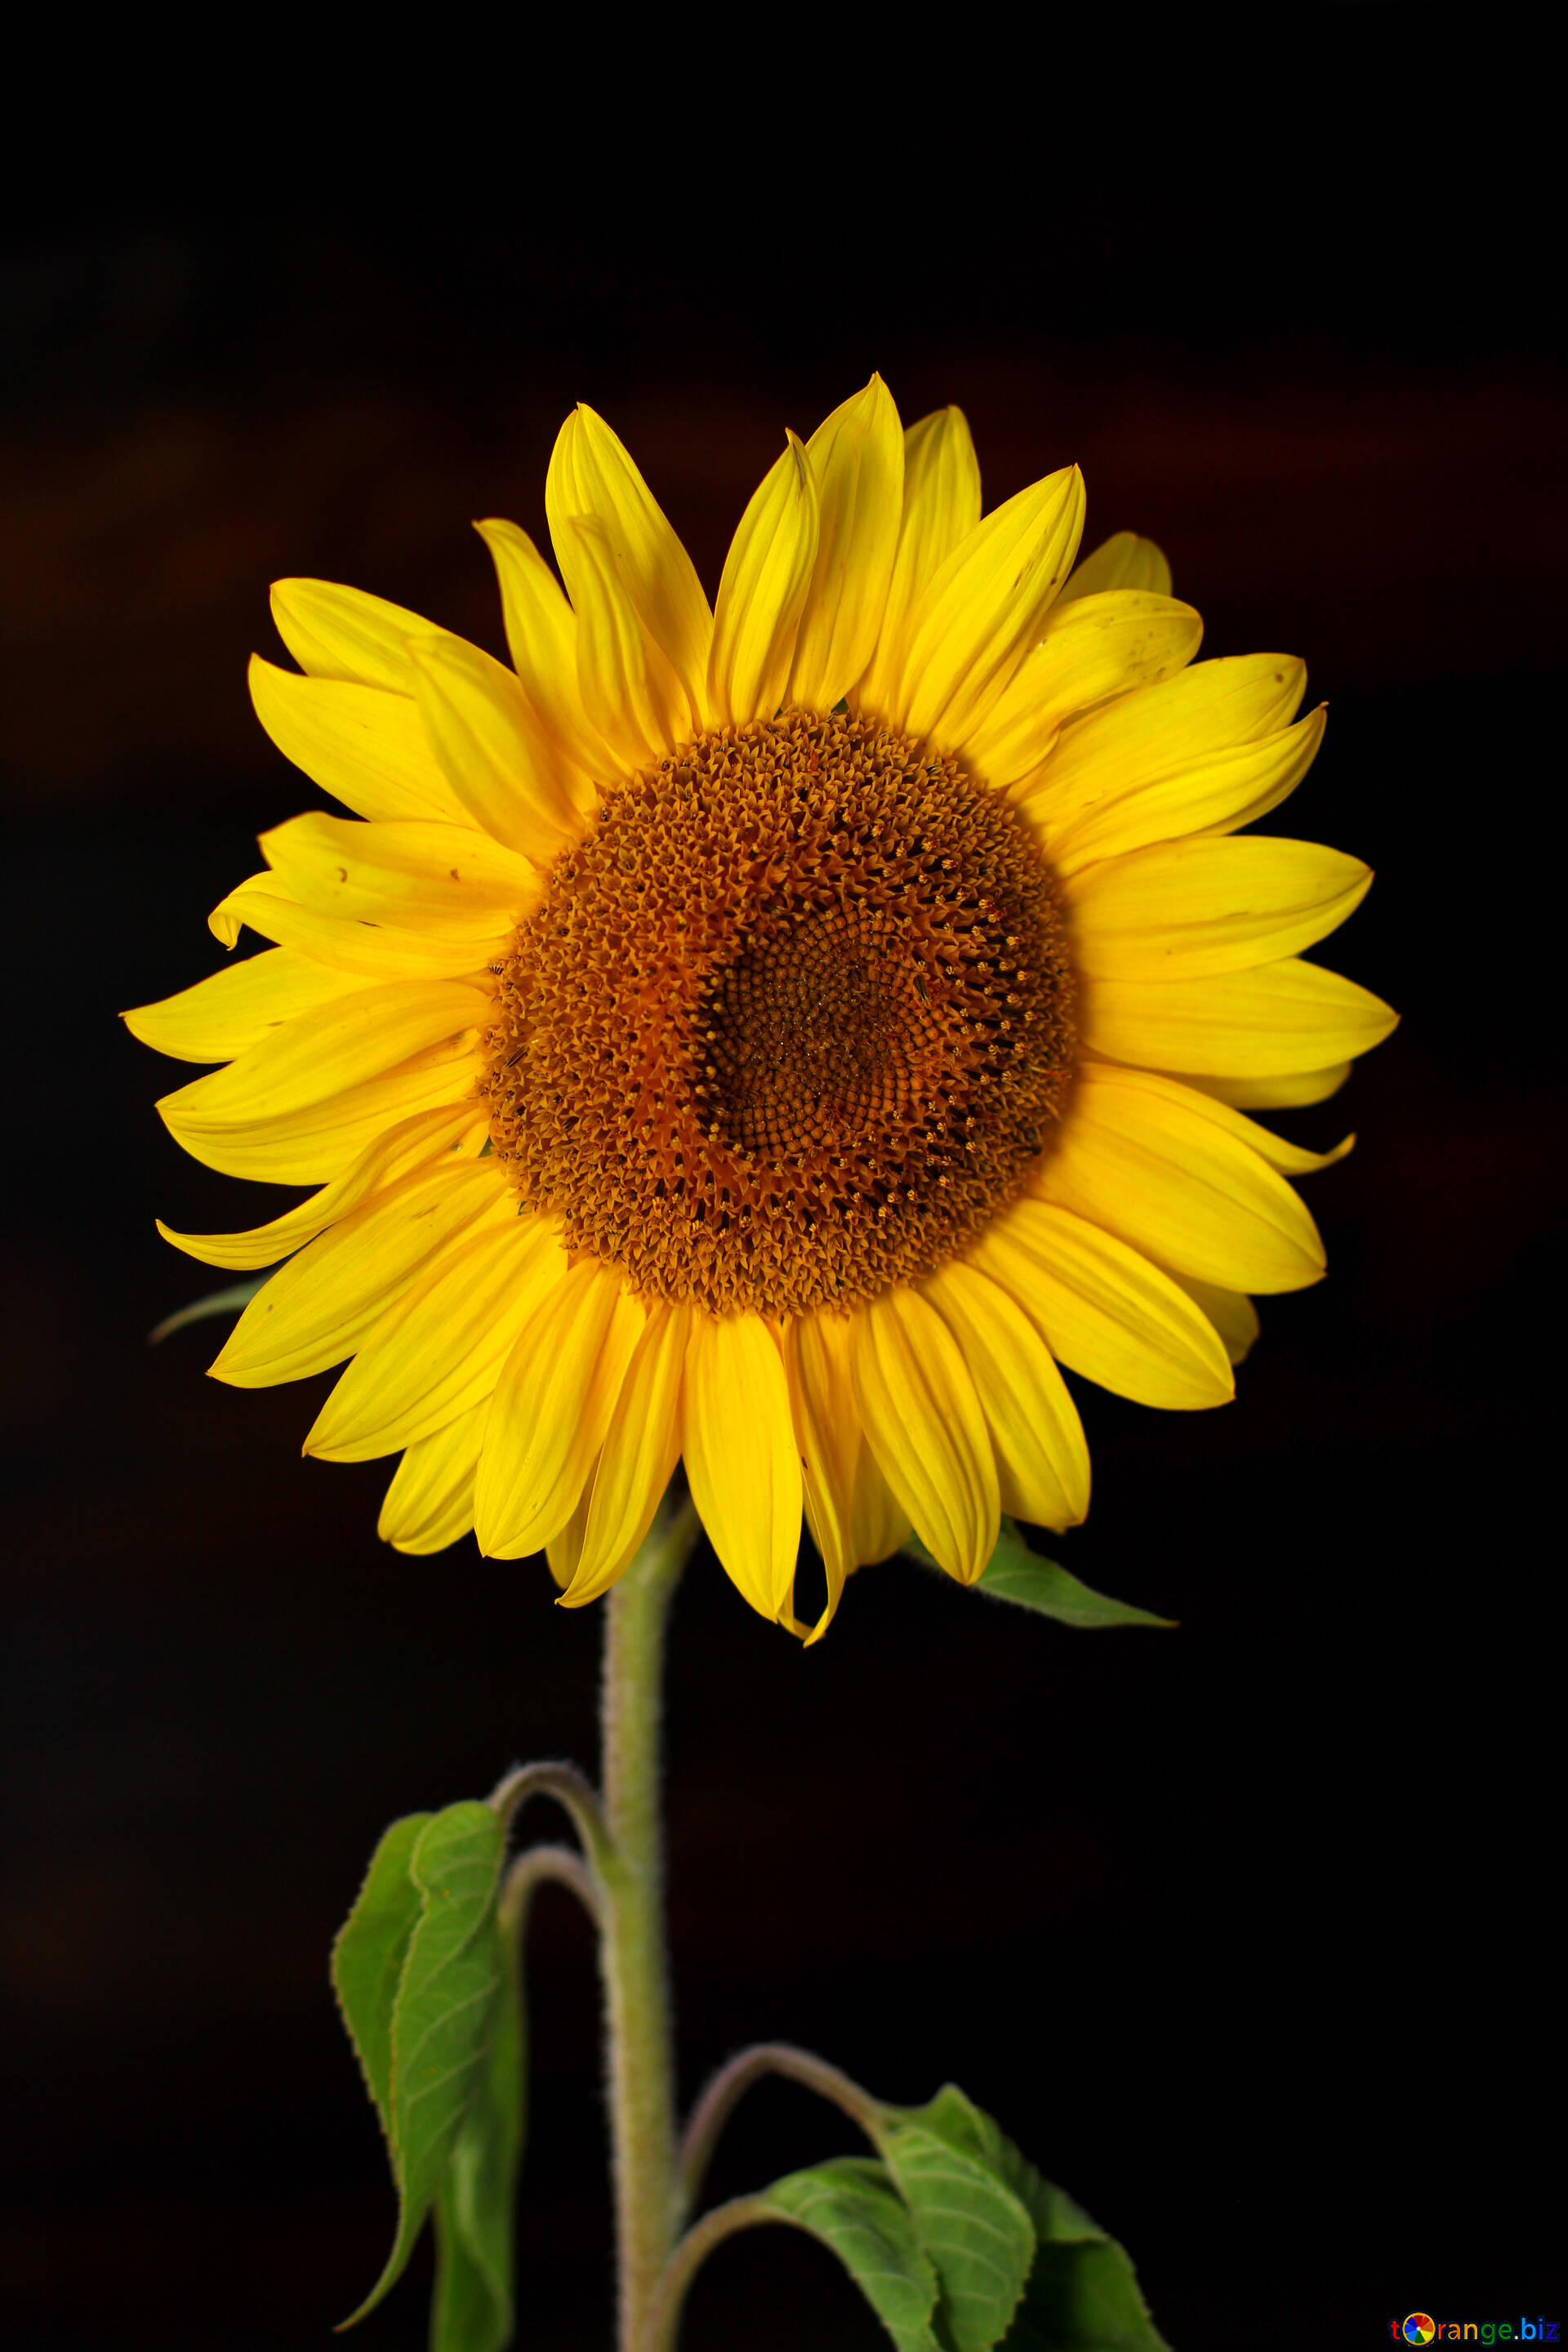 Flowers Sunflower Desktop Wallpaper Image Sunflower Flower On Black Background Image Sunflower № 32797. Torange.biz Free Pics On Cc By License